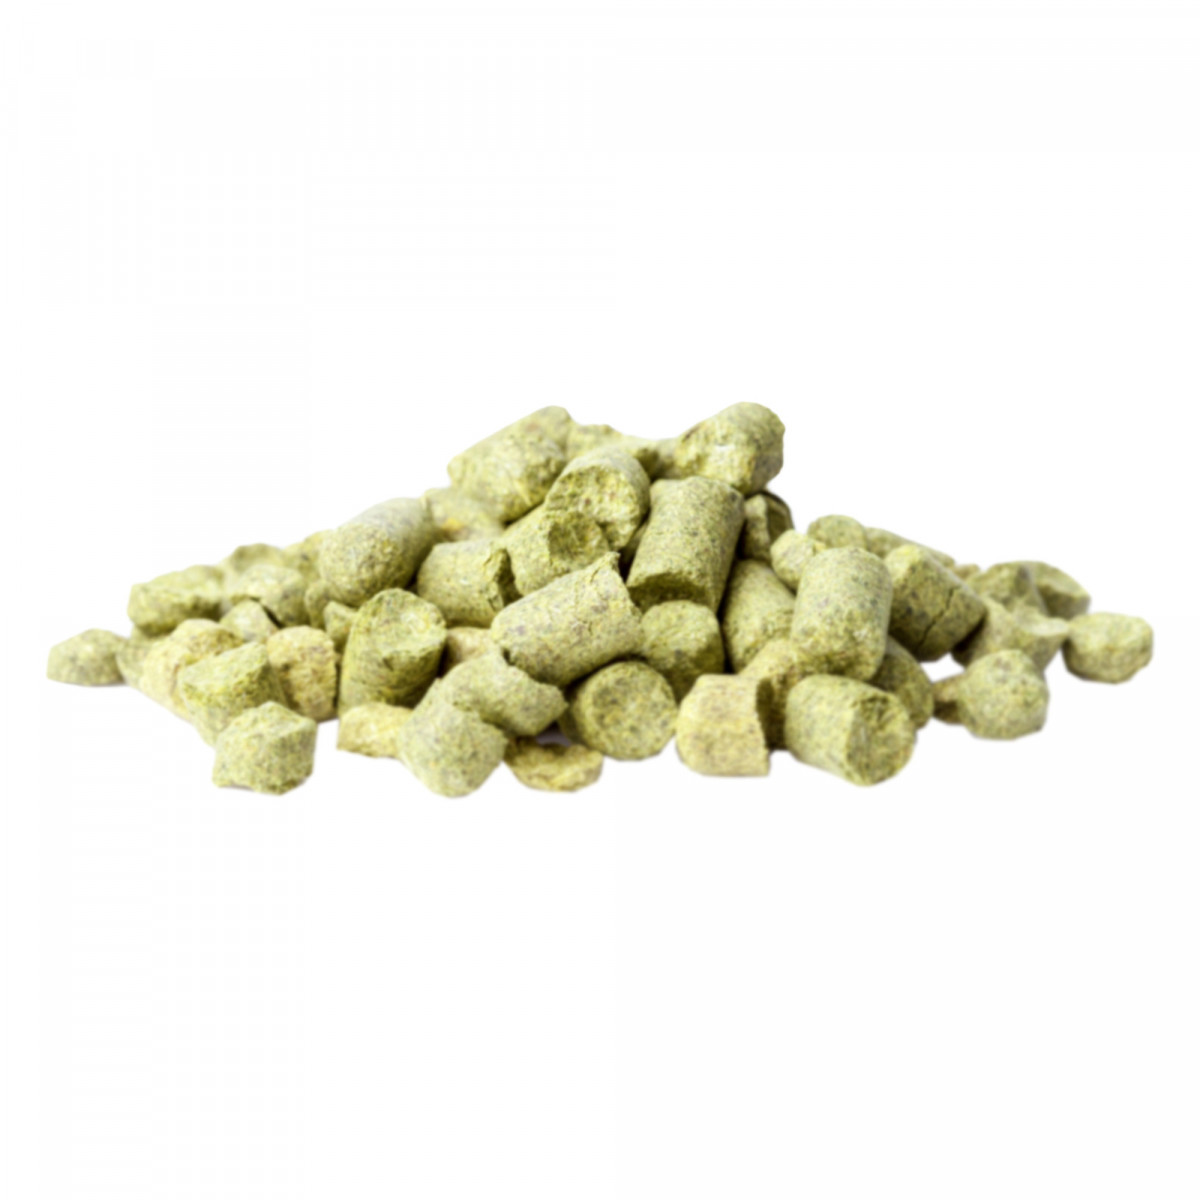 Hop pellets Wakatu - 100 g